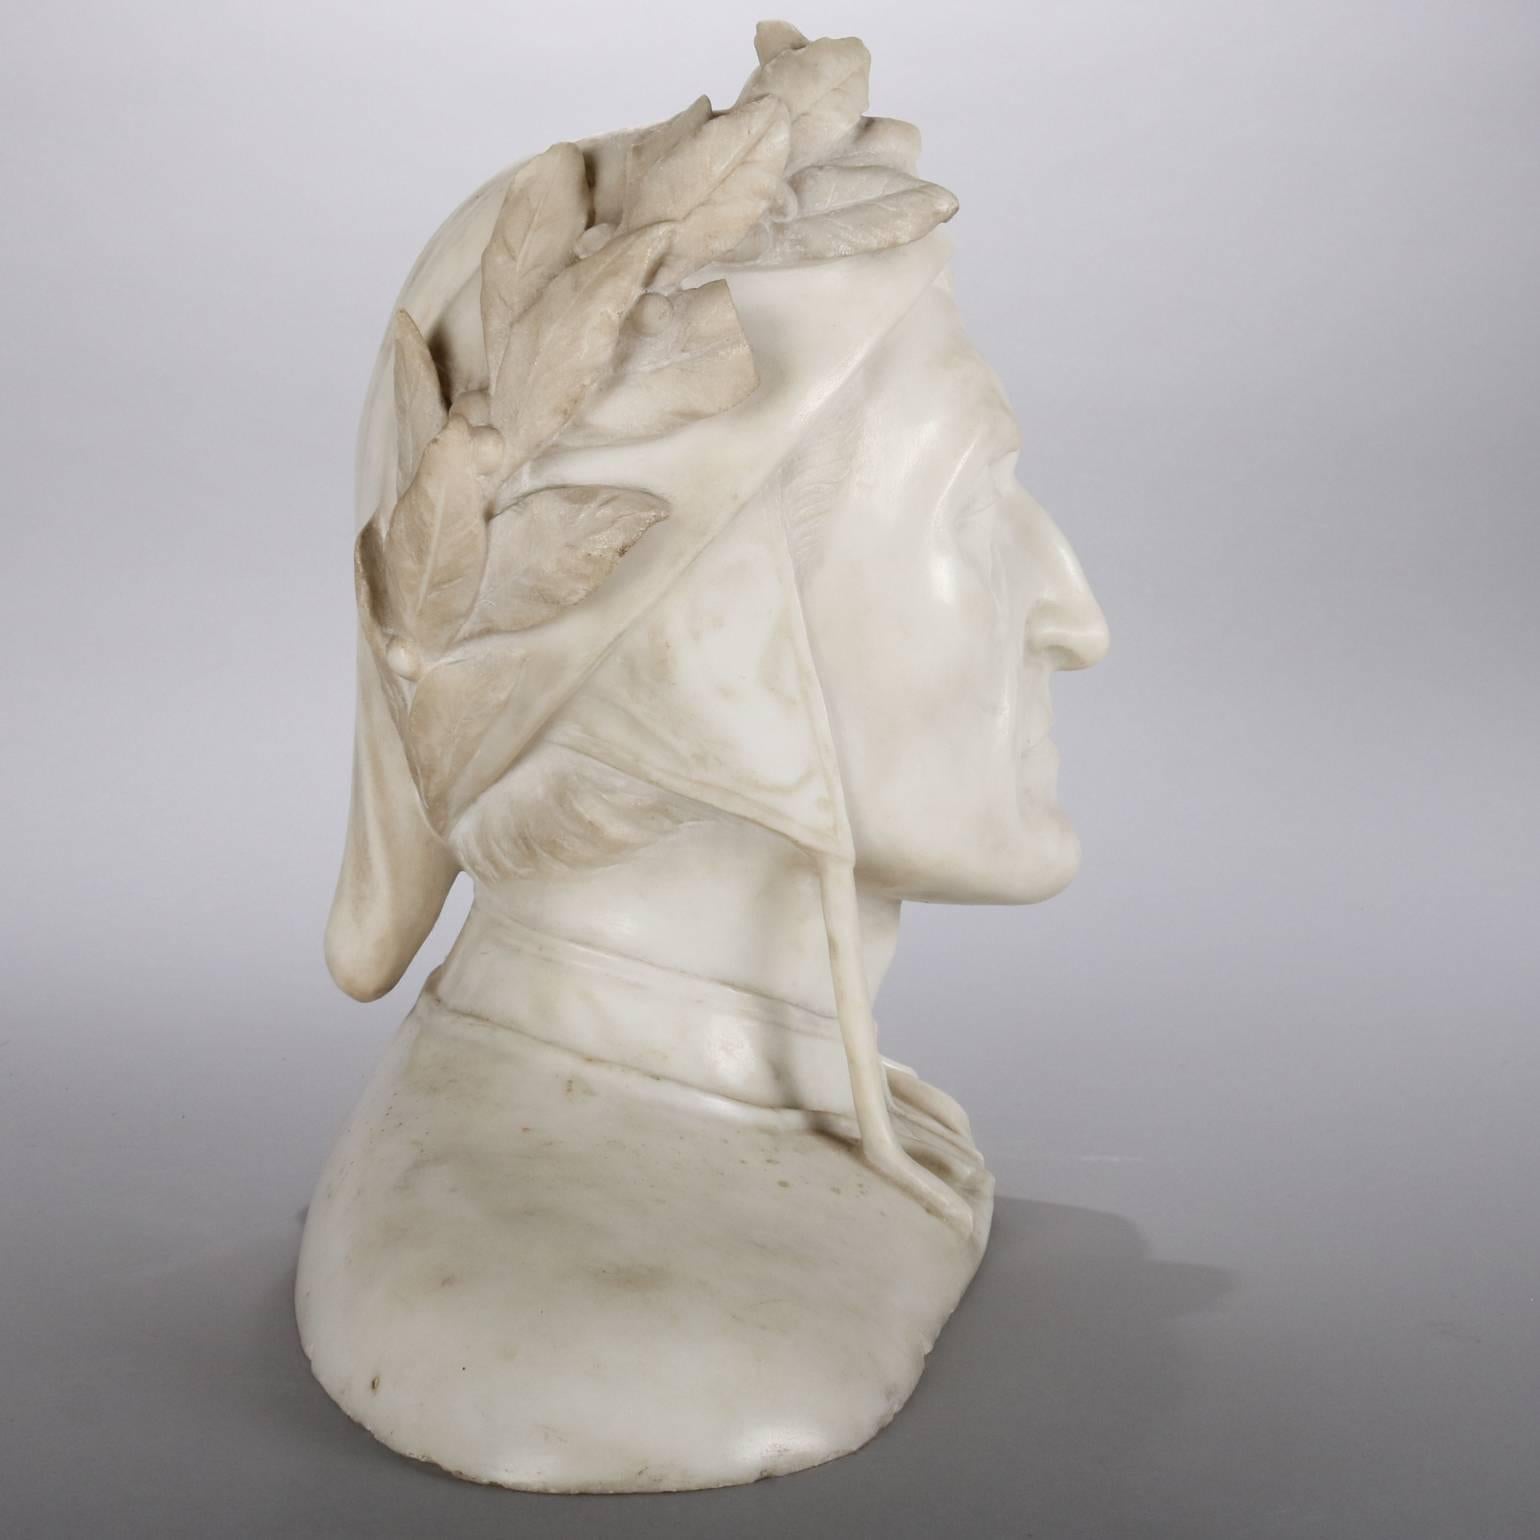 19th Century Antique Italian Hand-Carved Marble Sculpture Bust of Dante Alighieri